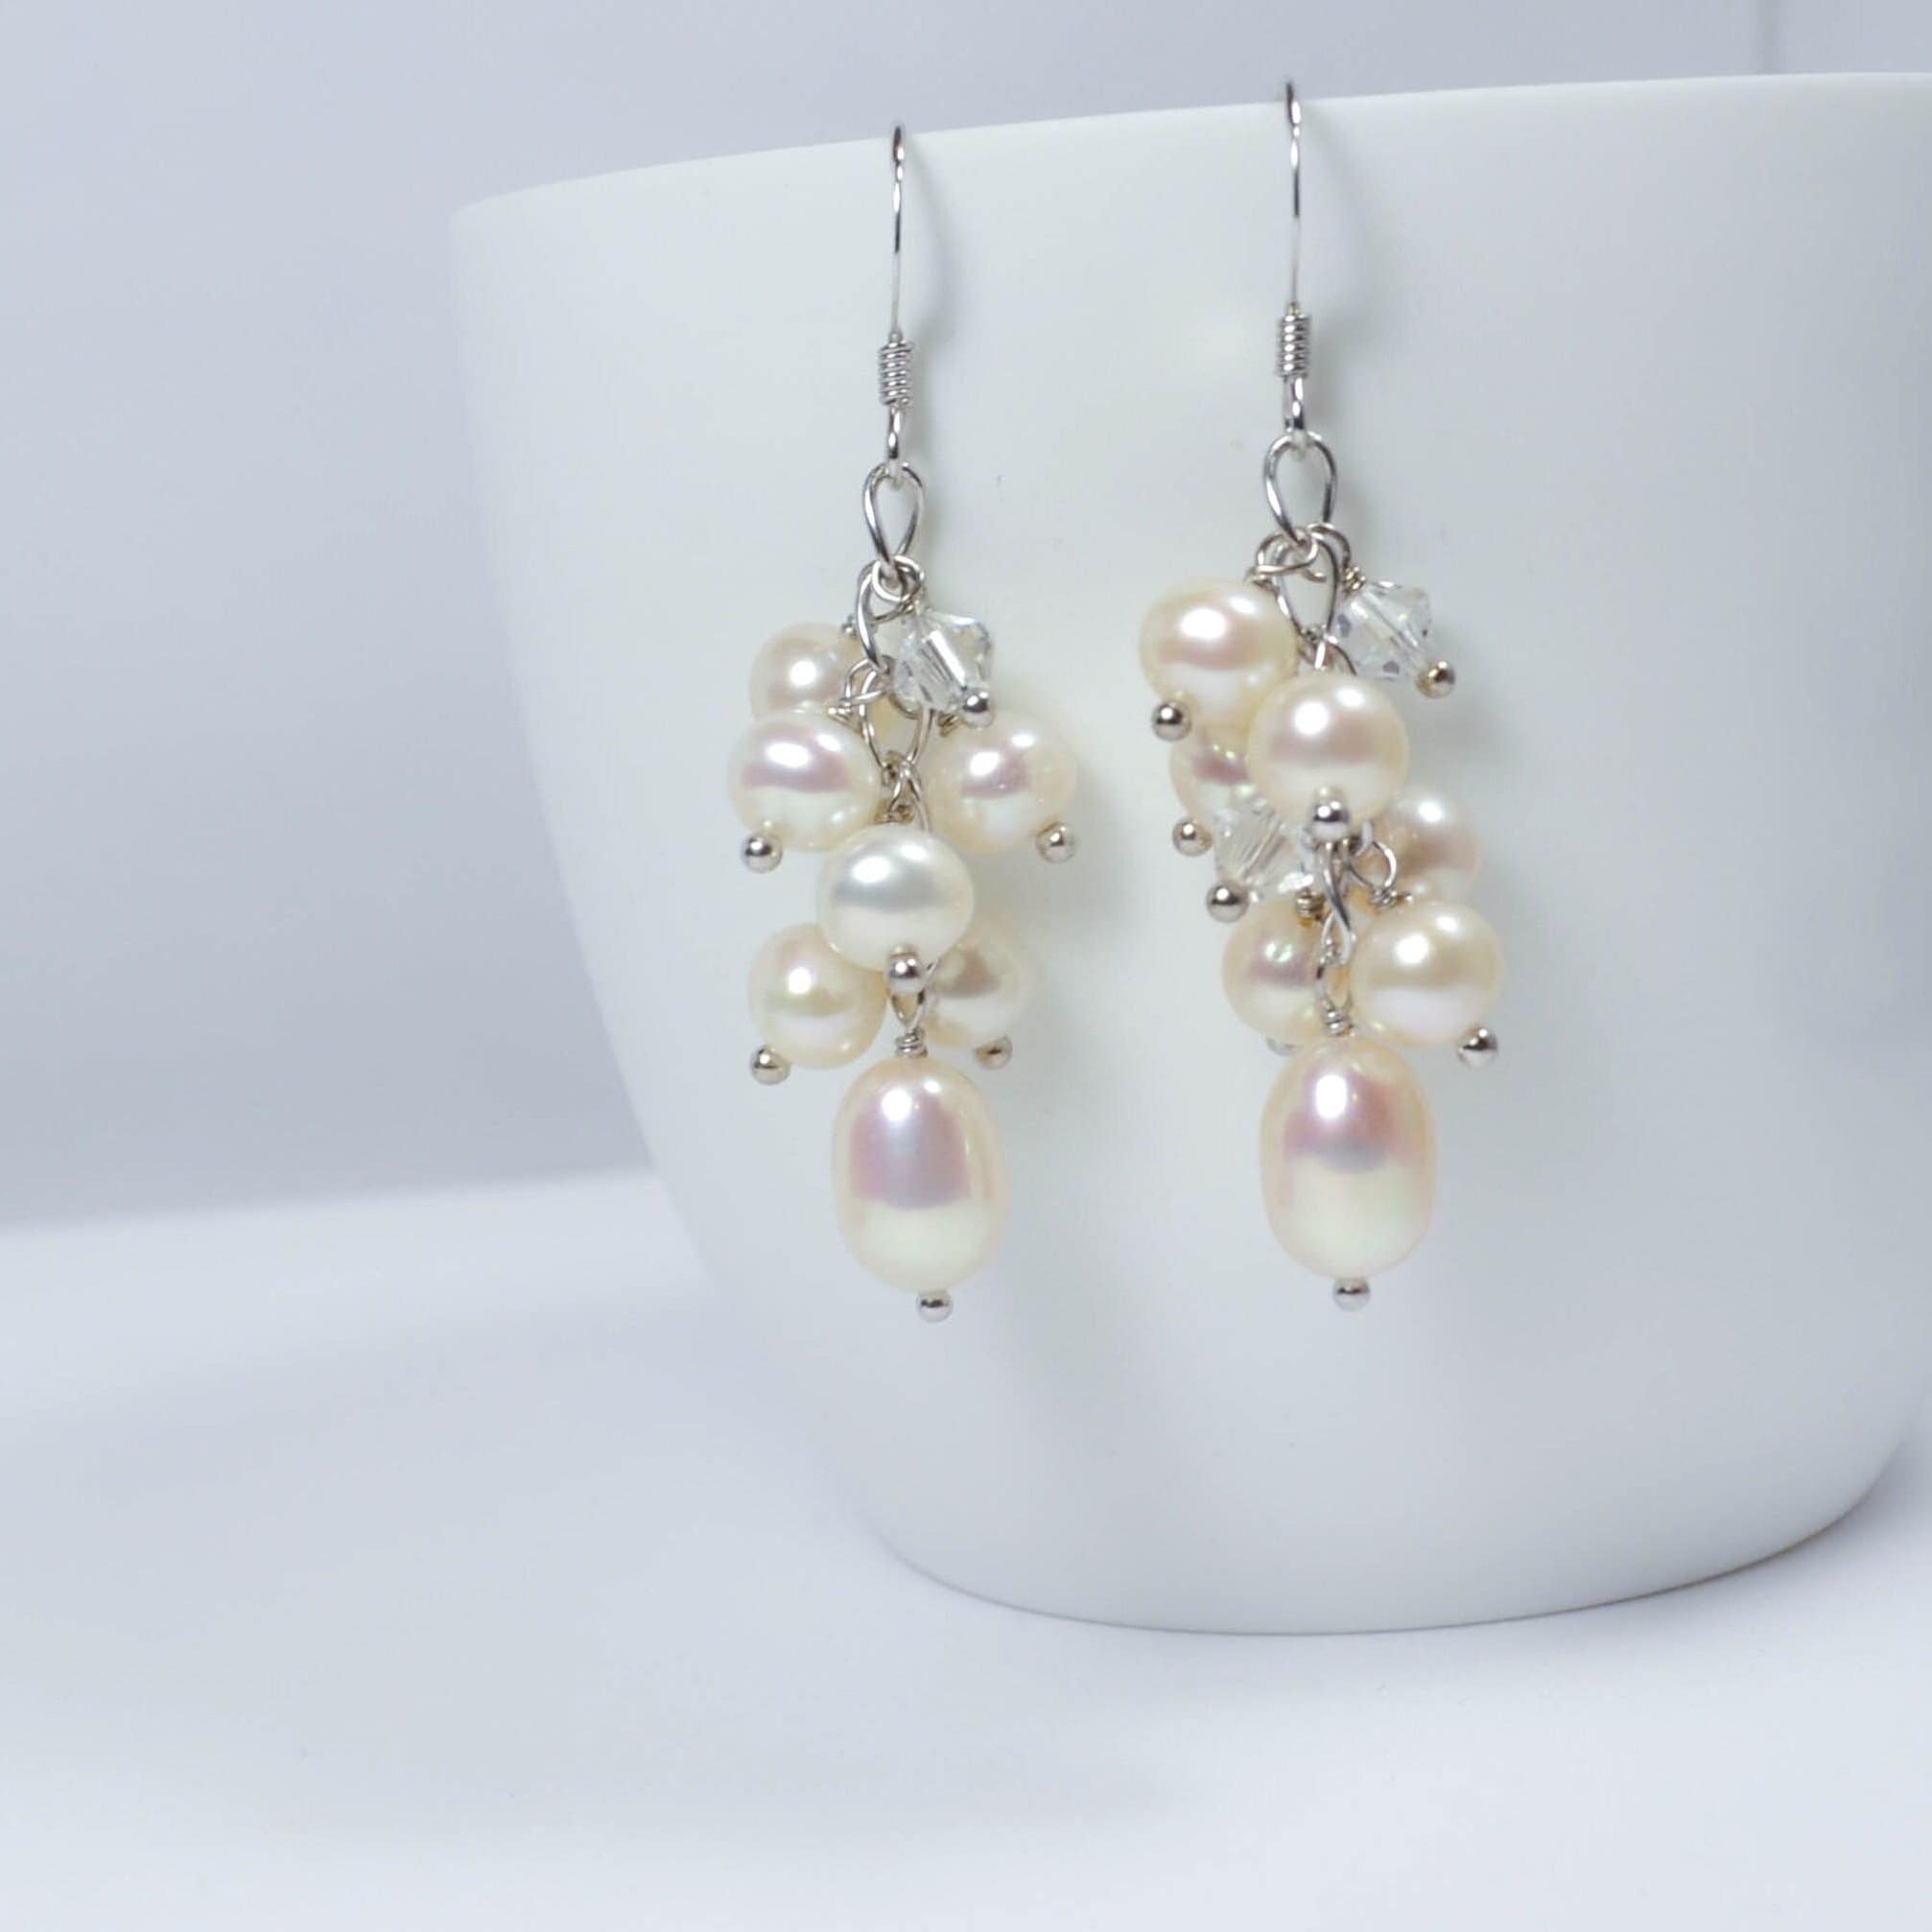 Long Crystal and Freshwater Pearl Cluster Earrings